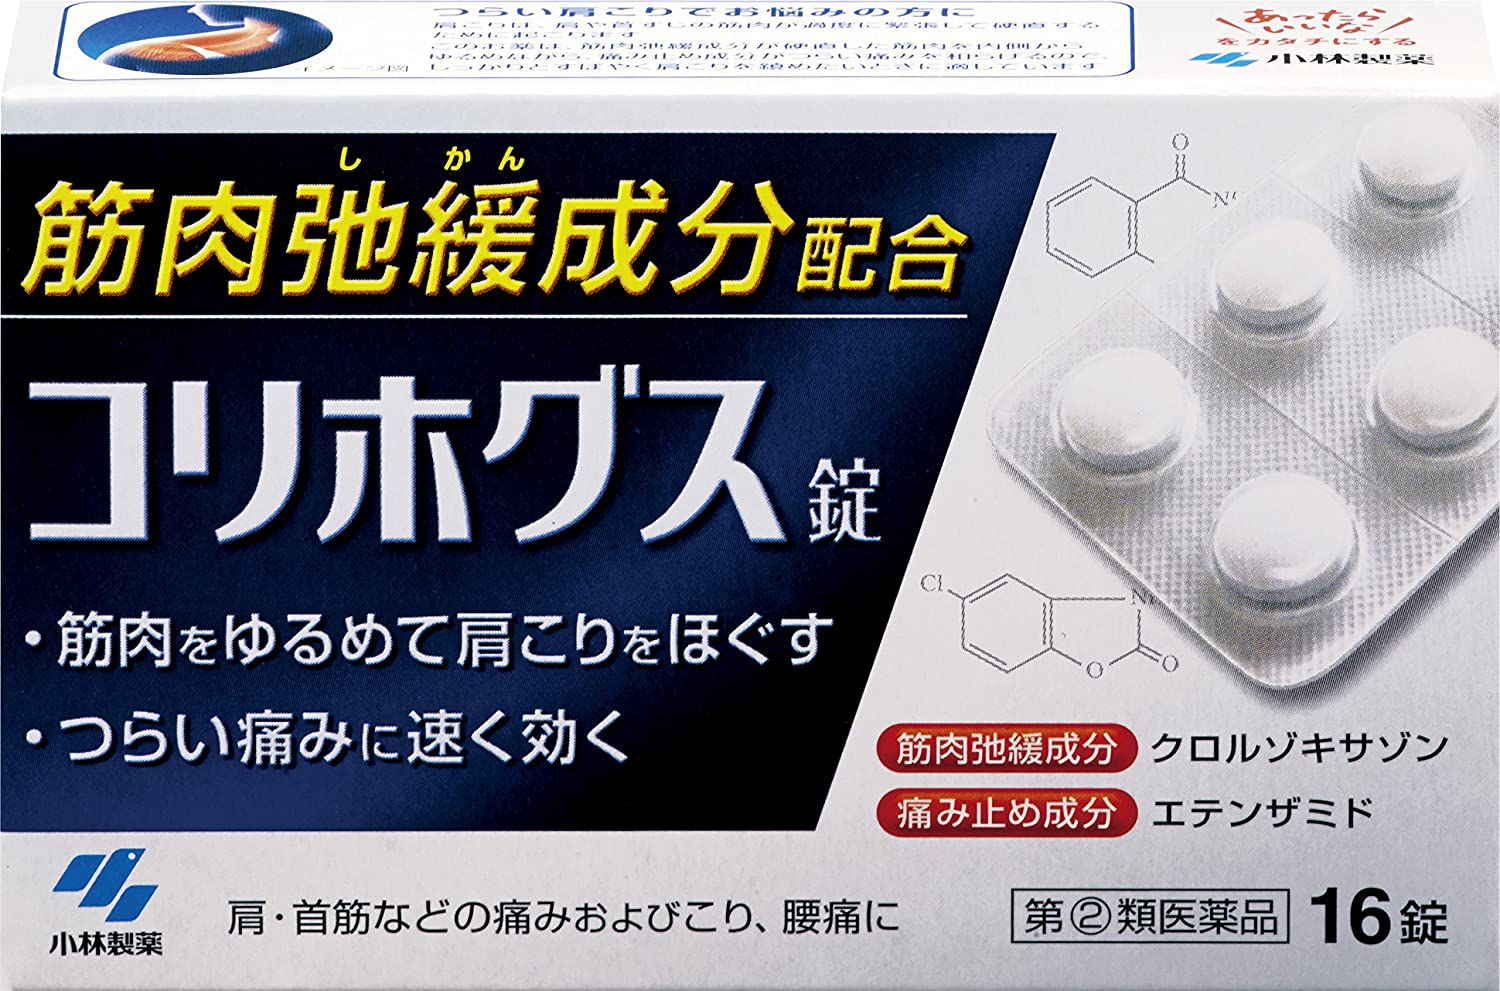 Японские препараты купить. Японские таблетки. Японские таблетки для мышц. Японские таблетки для суставов. Китайские обезболивающие таблетки.